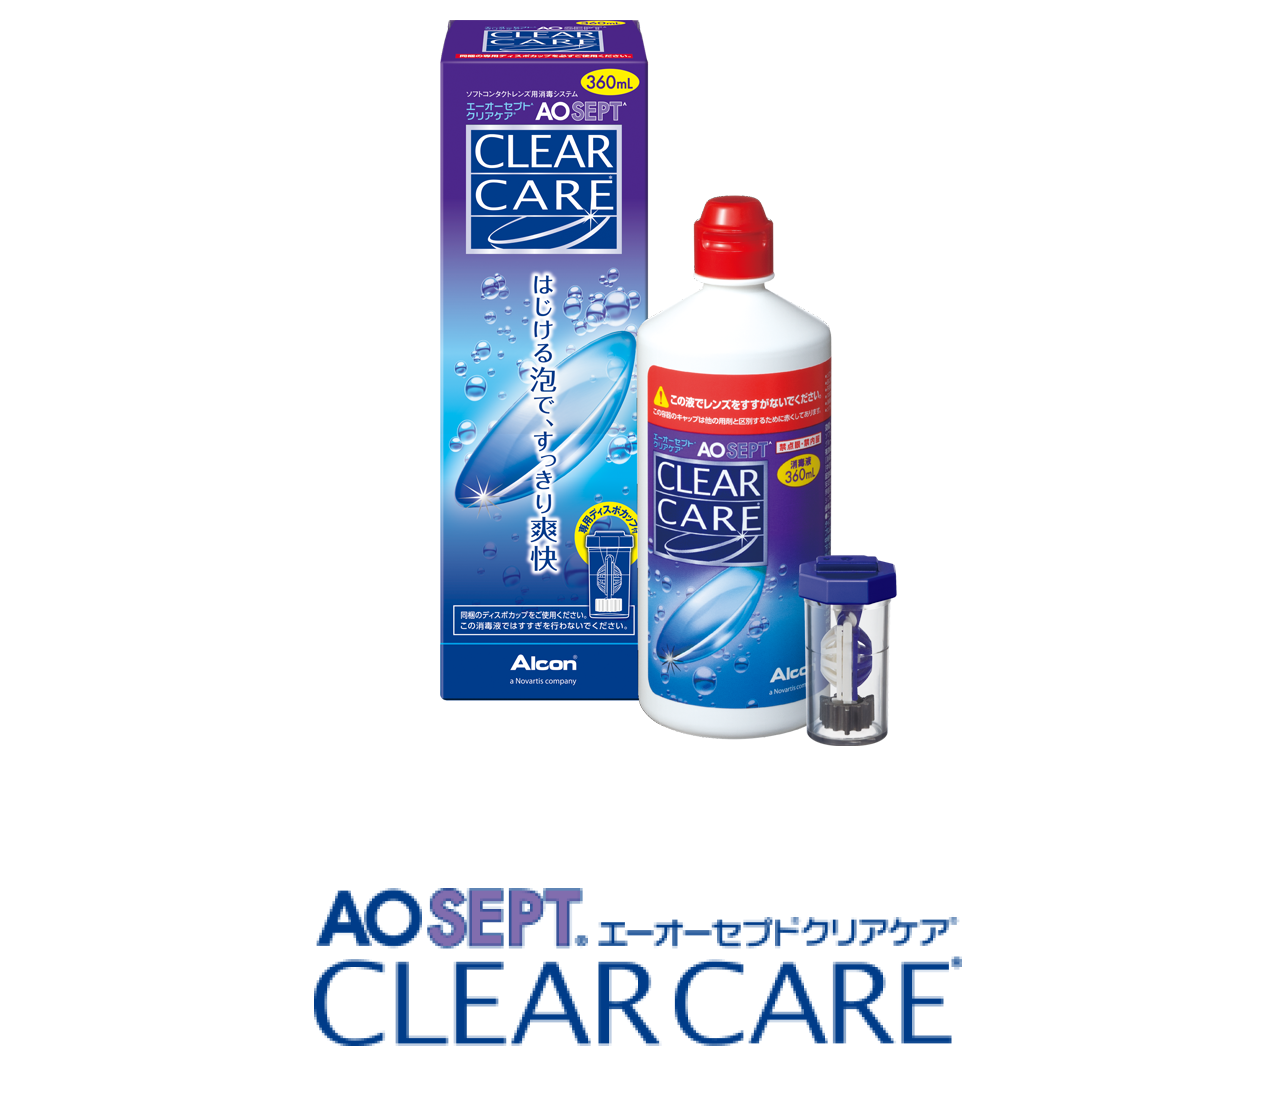 AO Sept Clear Care